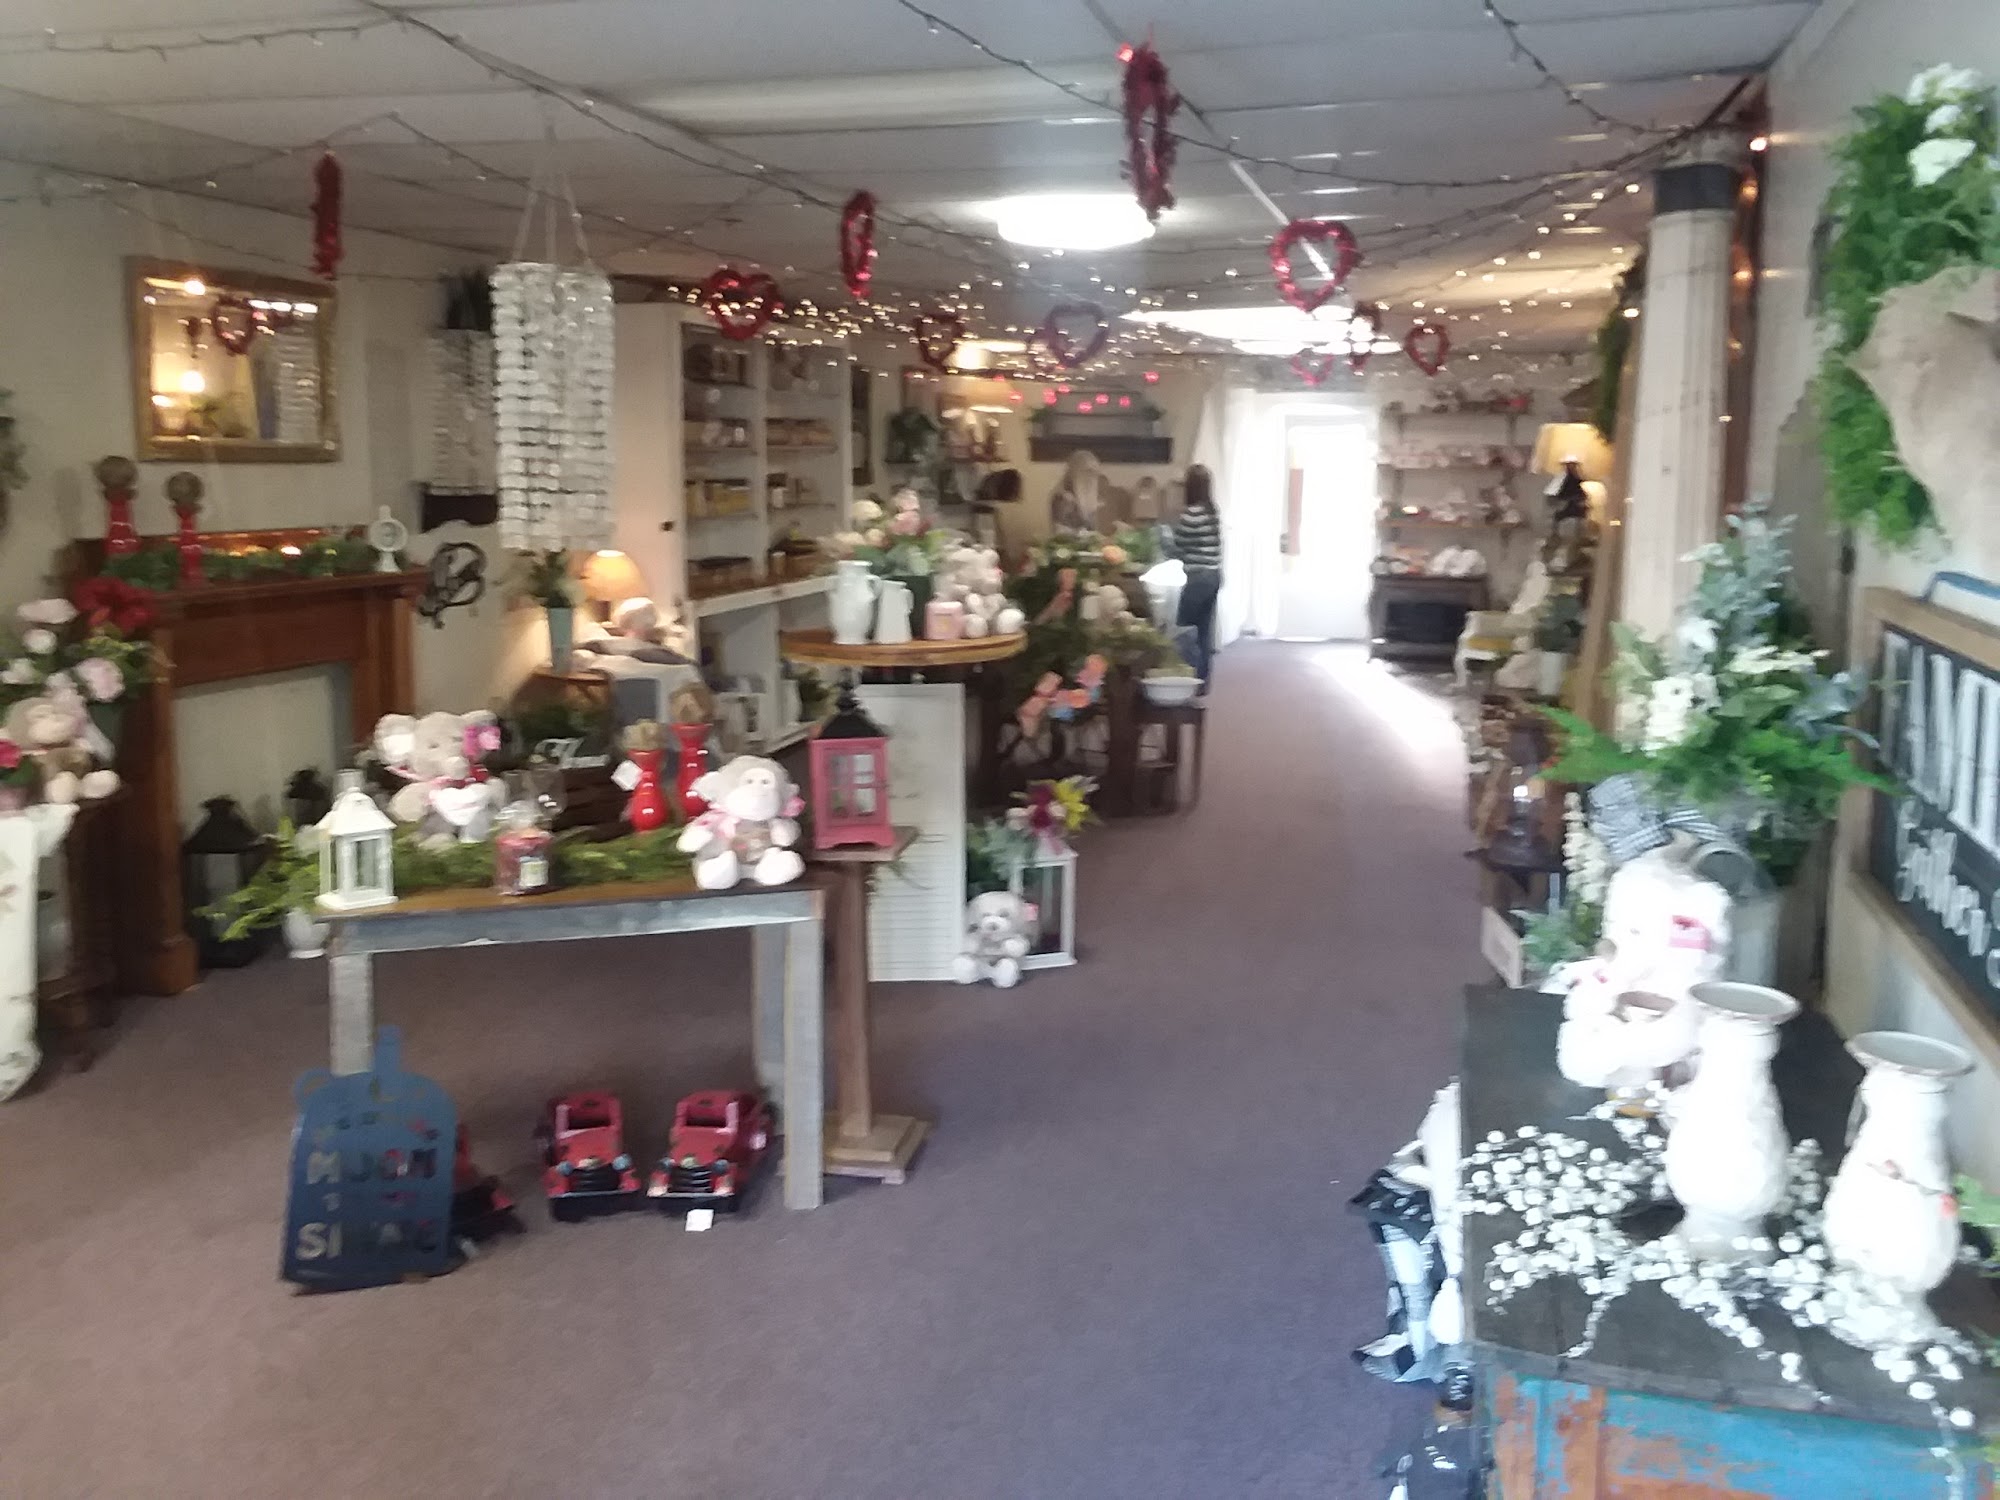 Shadyside Flower Shop 3838 Central Ave, Shadyside Ohio 43947